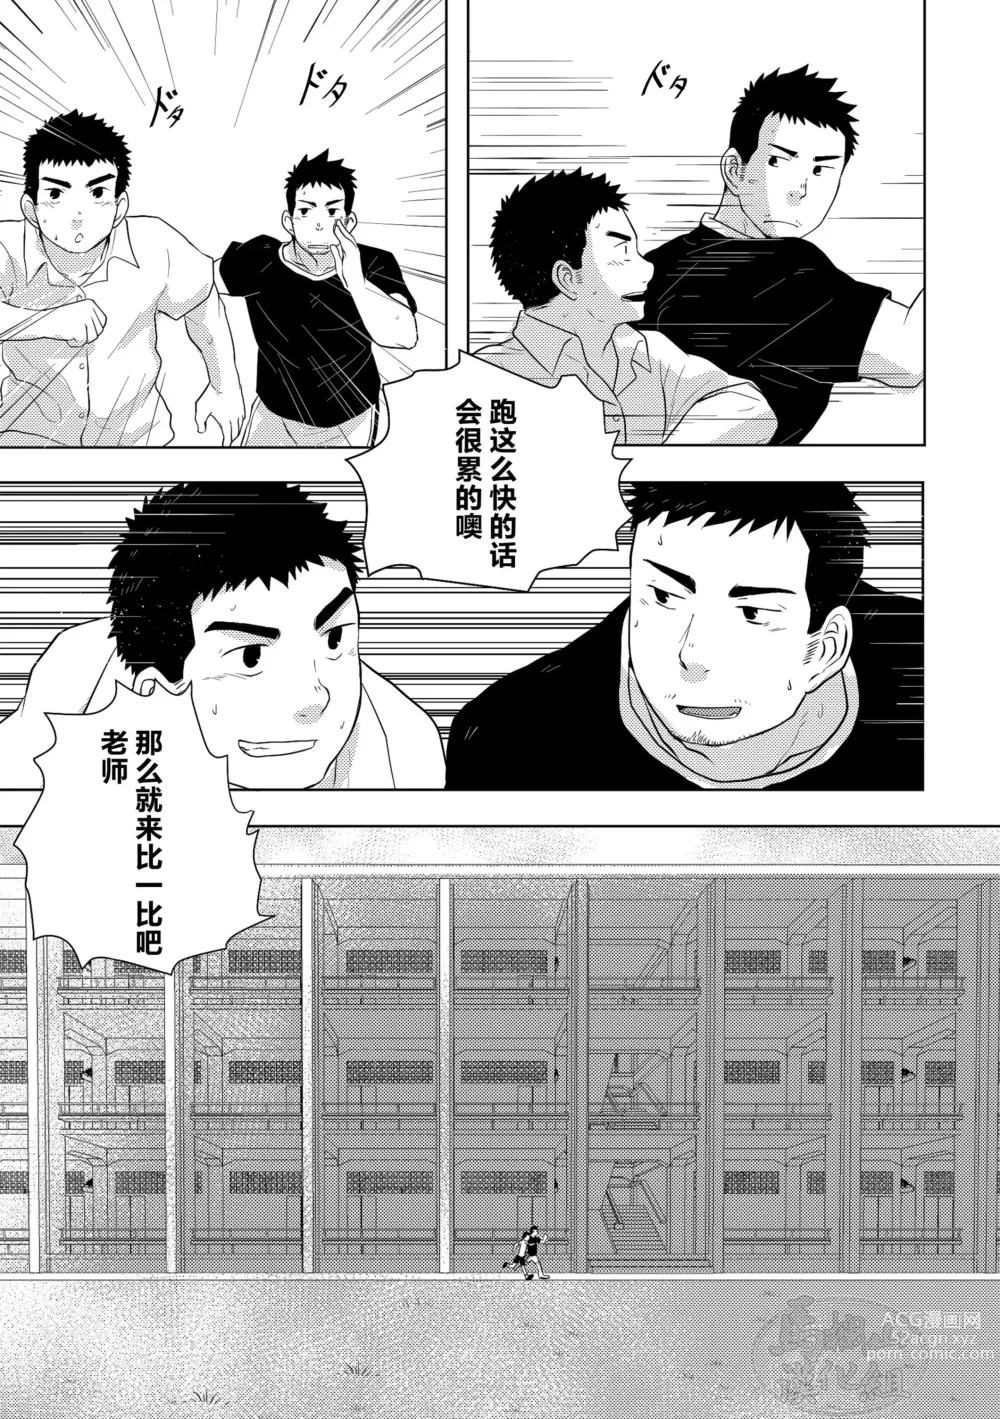 Page 12 of manga 汗だく体育